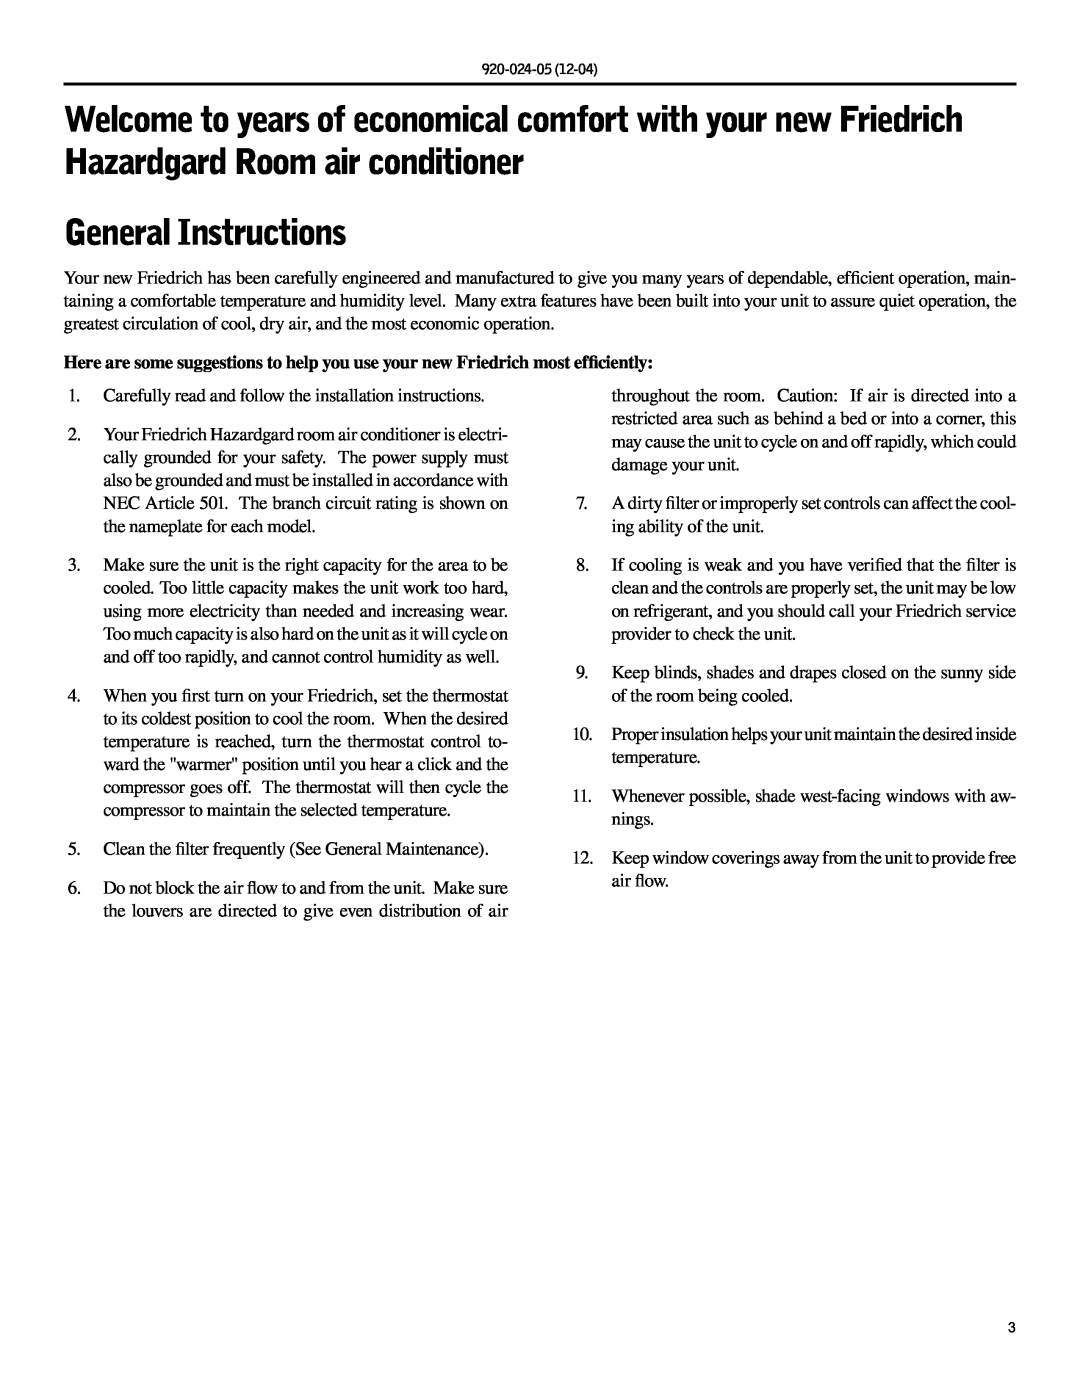 Friedrich SH20, SH15 operation manual General Instructions 